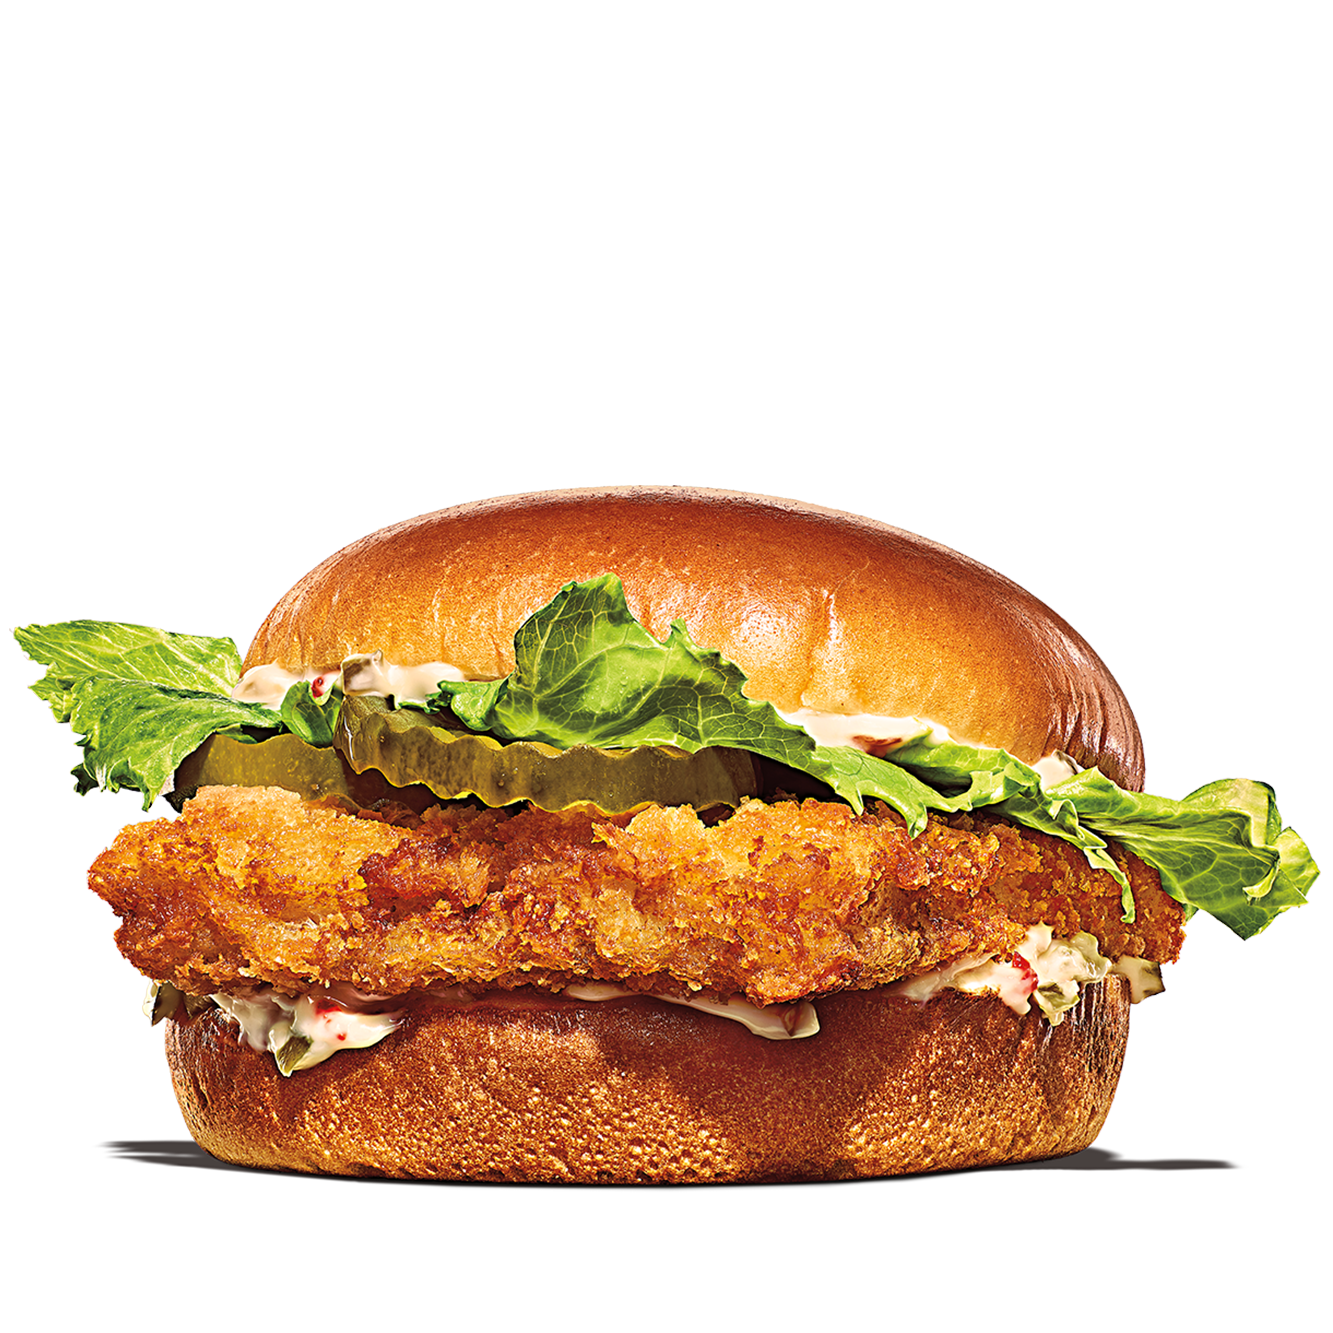 Calories in Burger King Big Fish